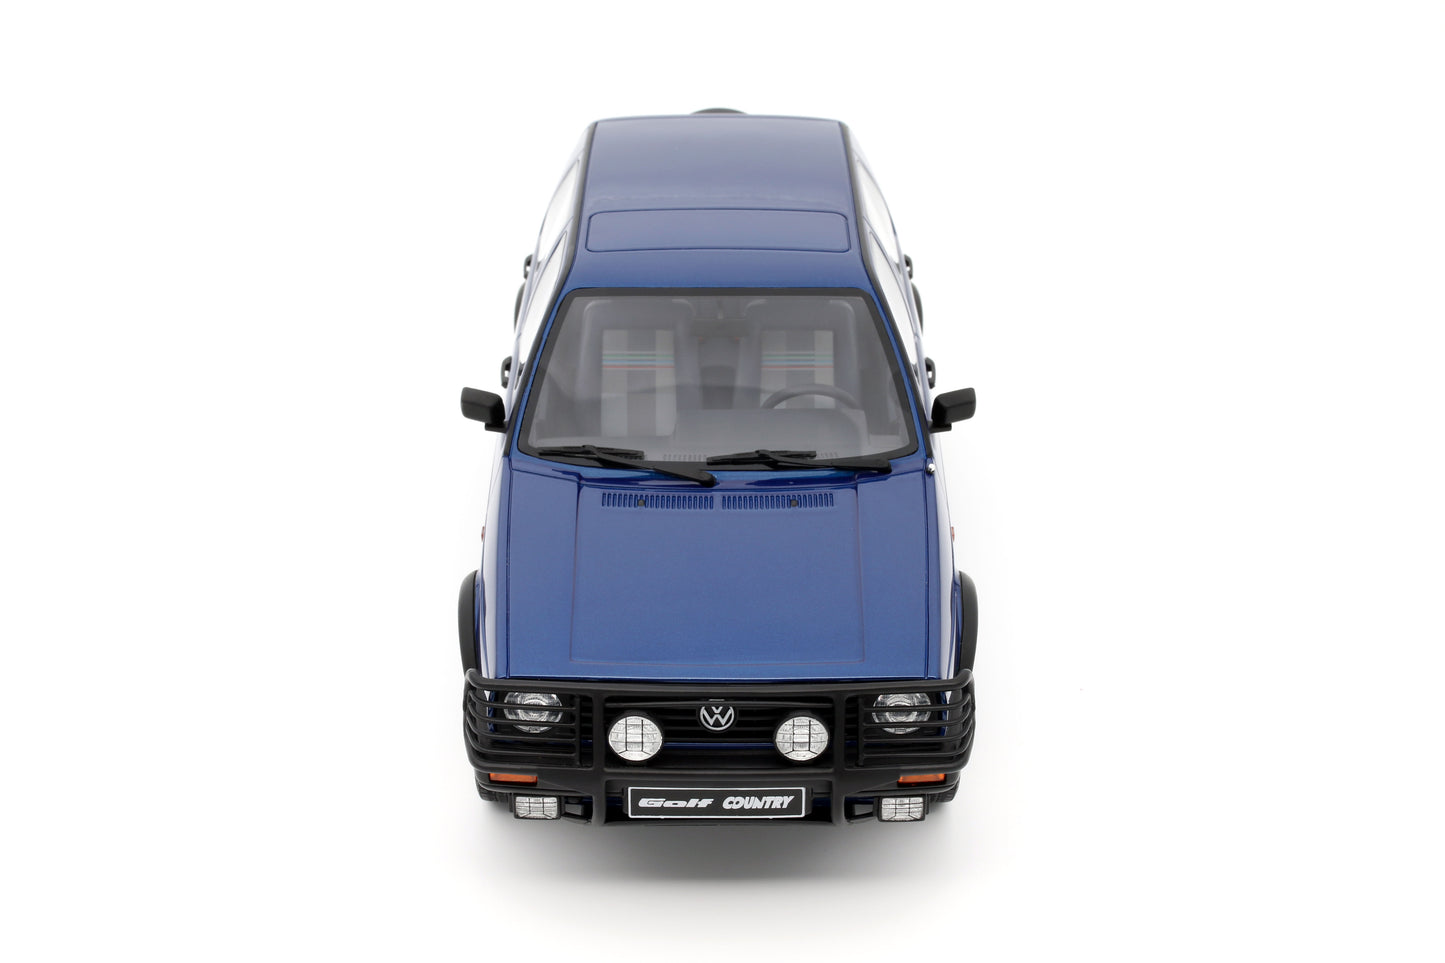 OTTO 1:18 Volkswagen Golf II Country 1990 Blue OT973